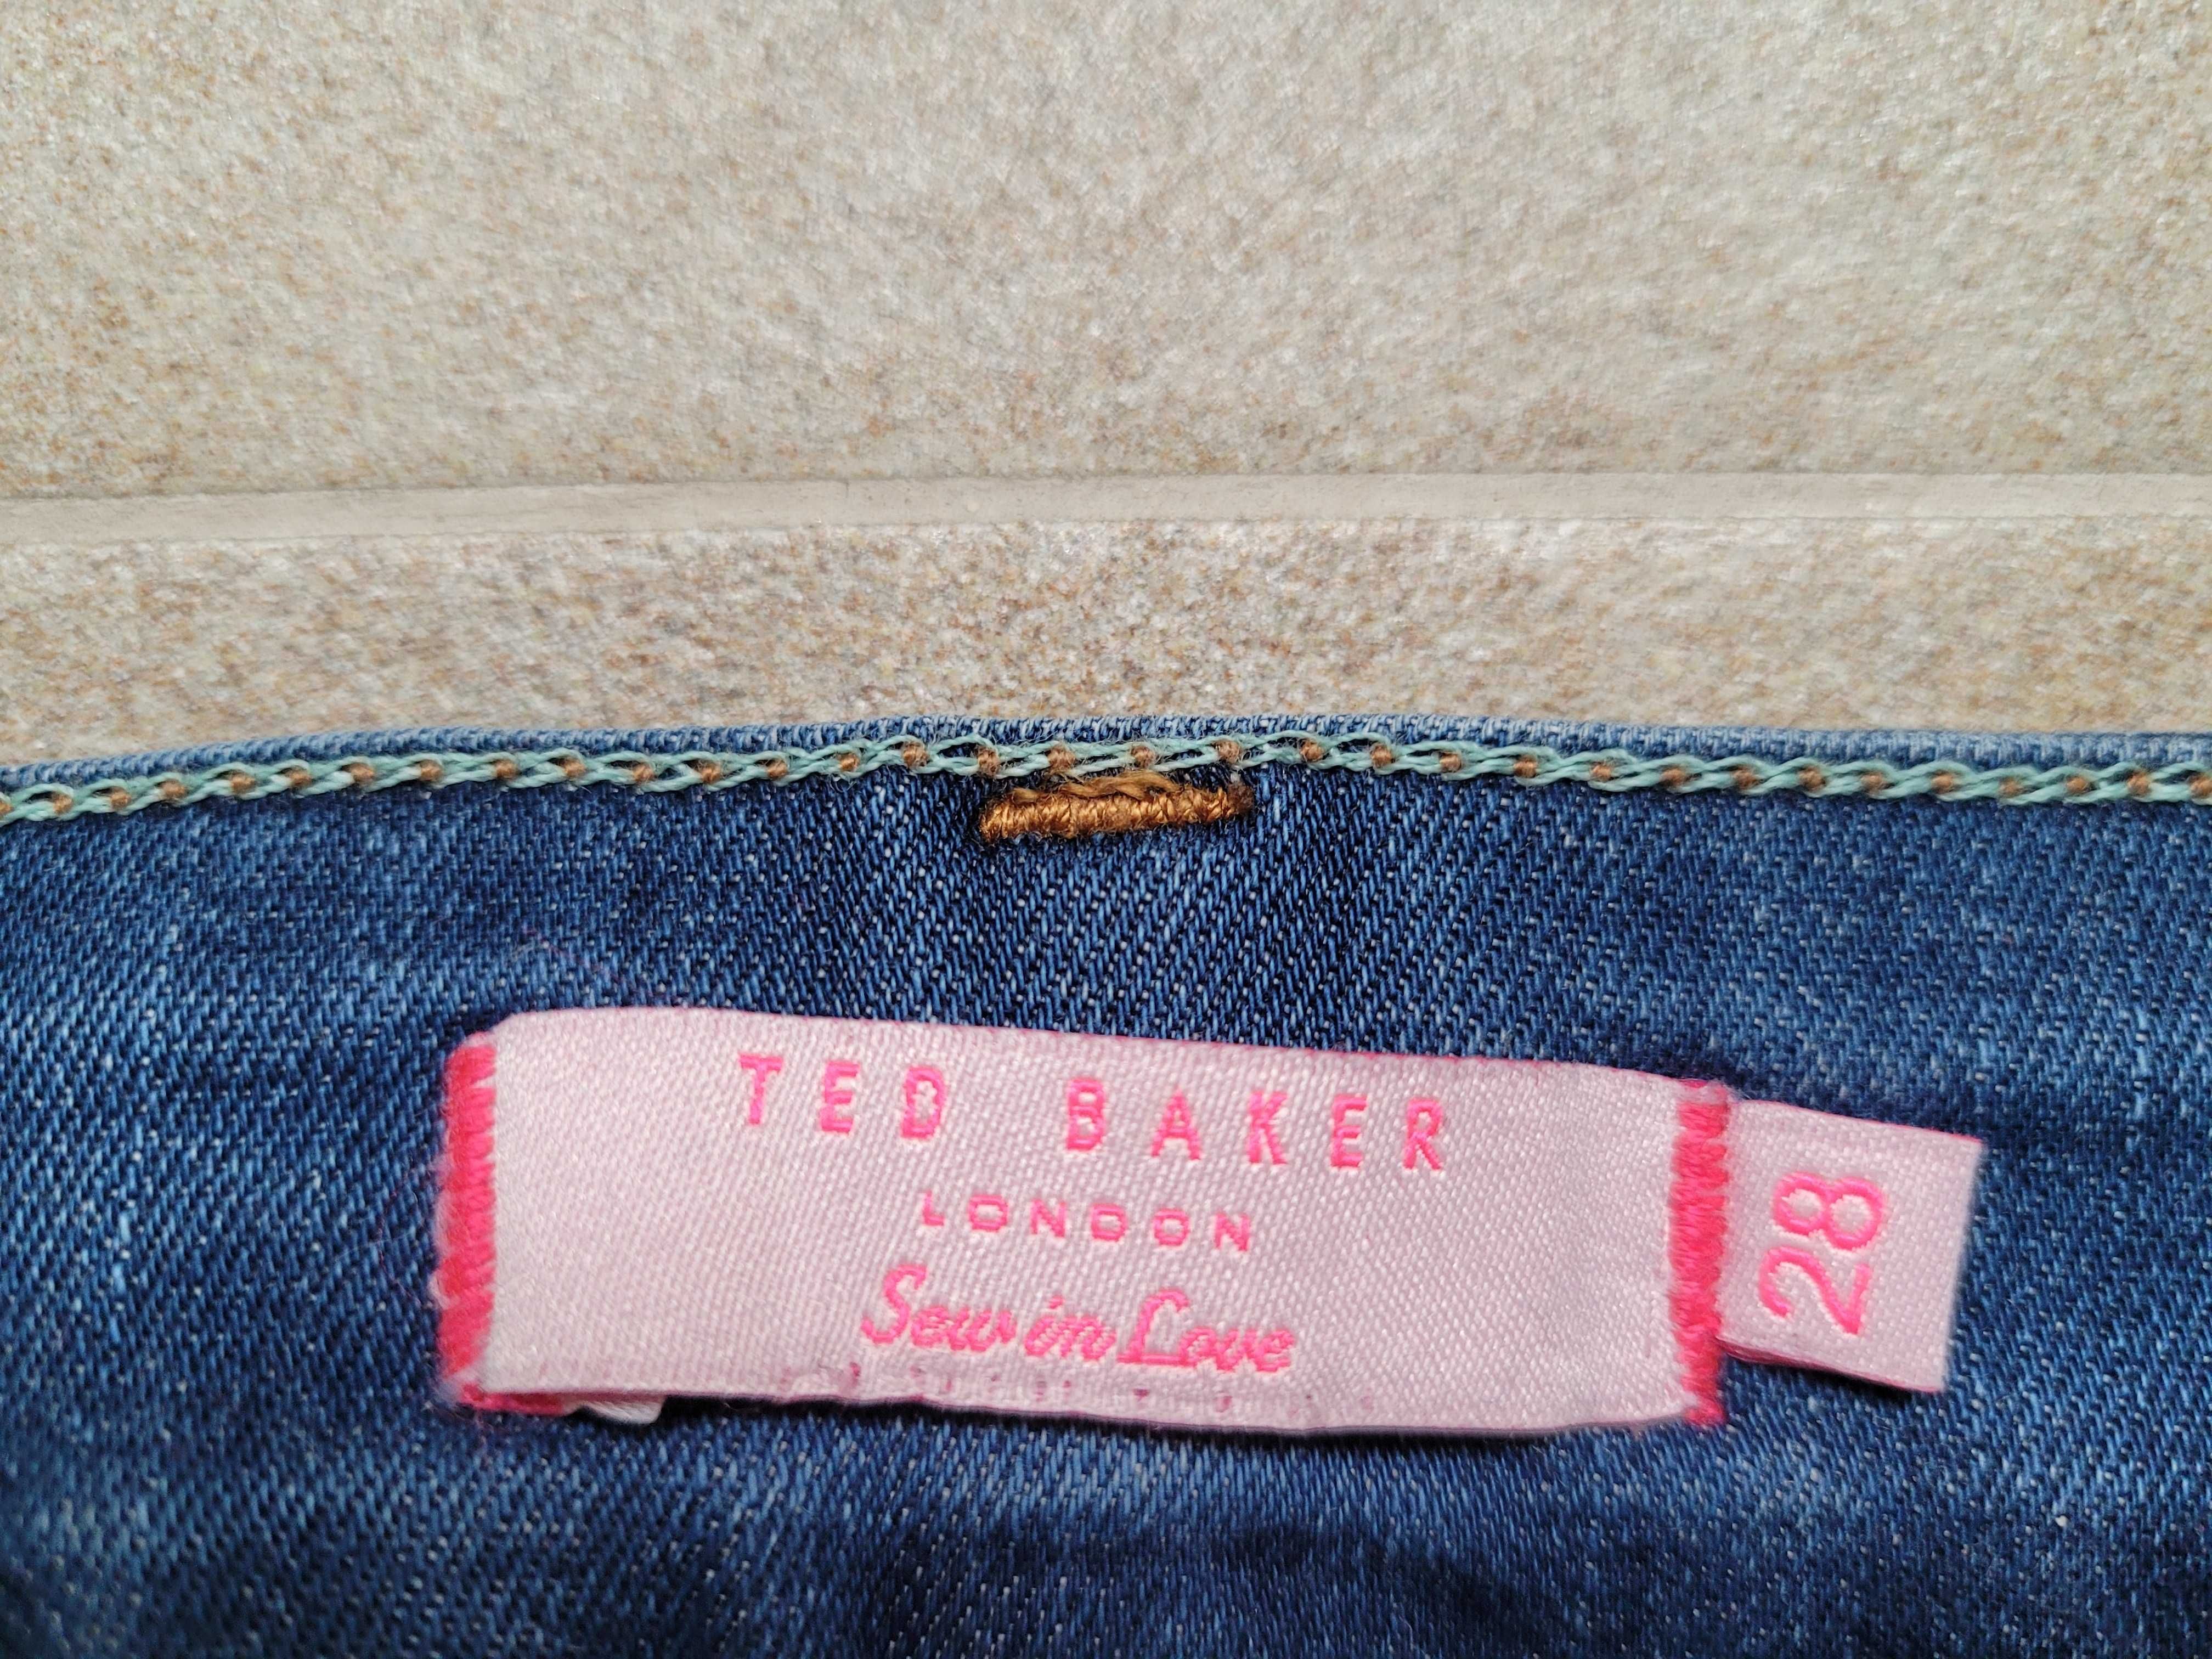 TED BAKER, Tally Weijl, Levi Strauss дънки с подарък сако на ТОП цена